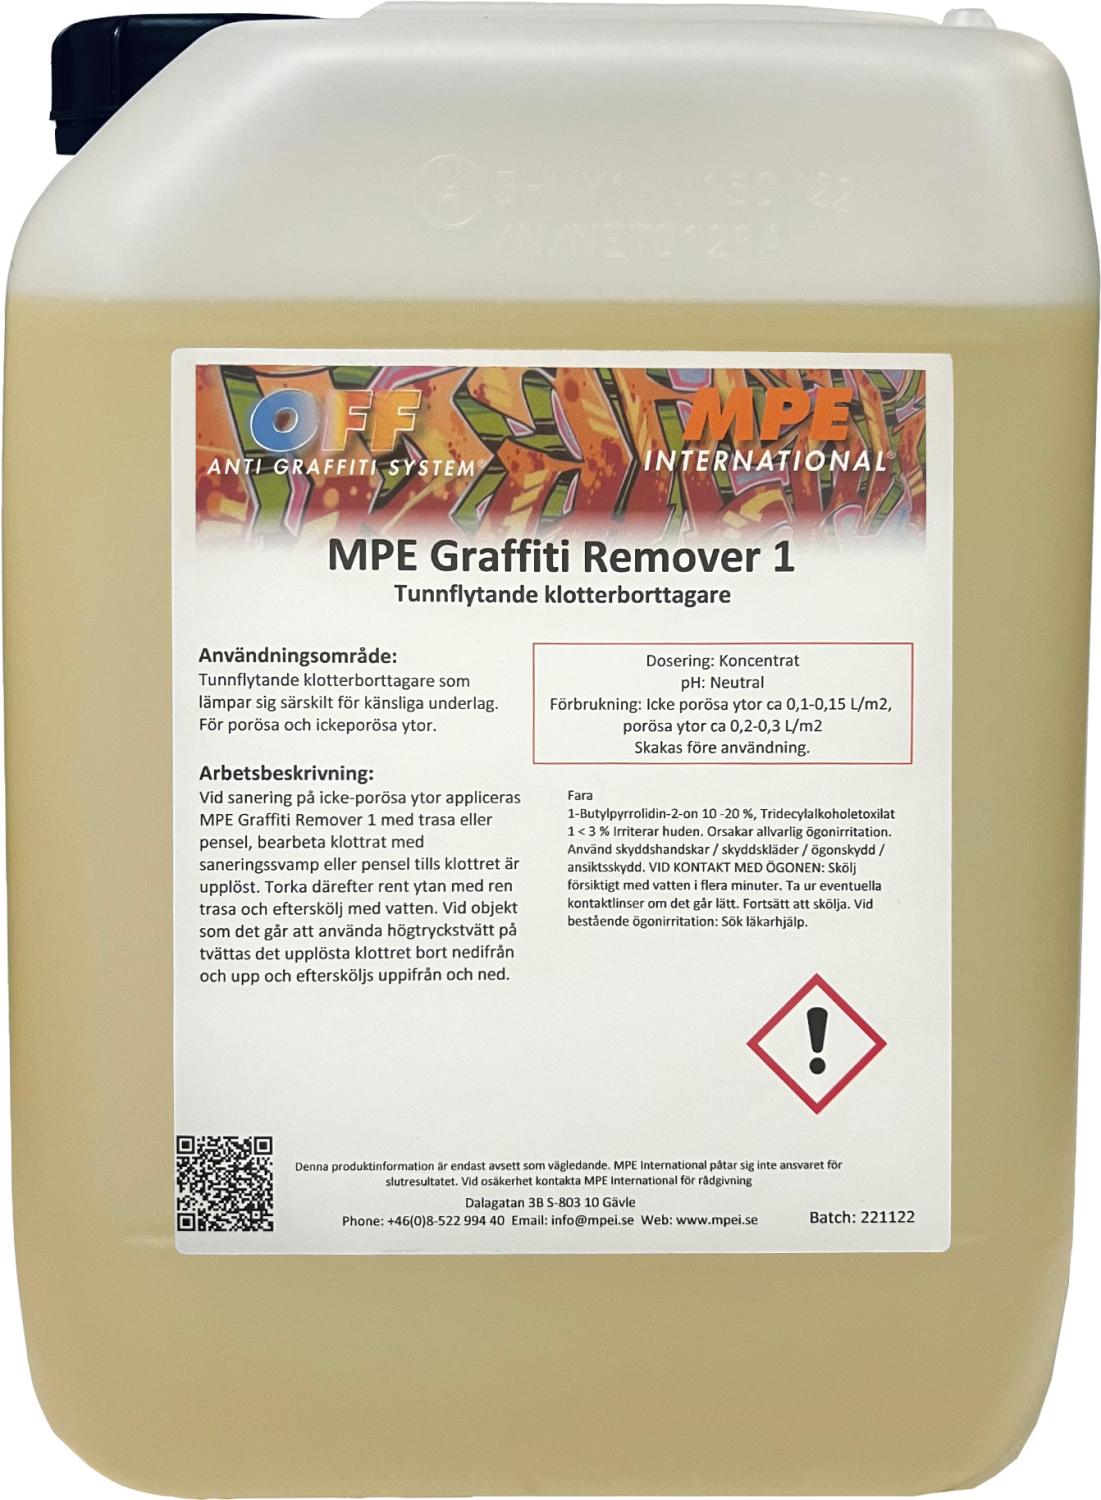 MPE Graffiti Remover 1, Tunnflytande